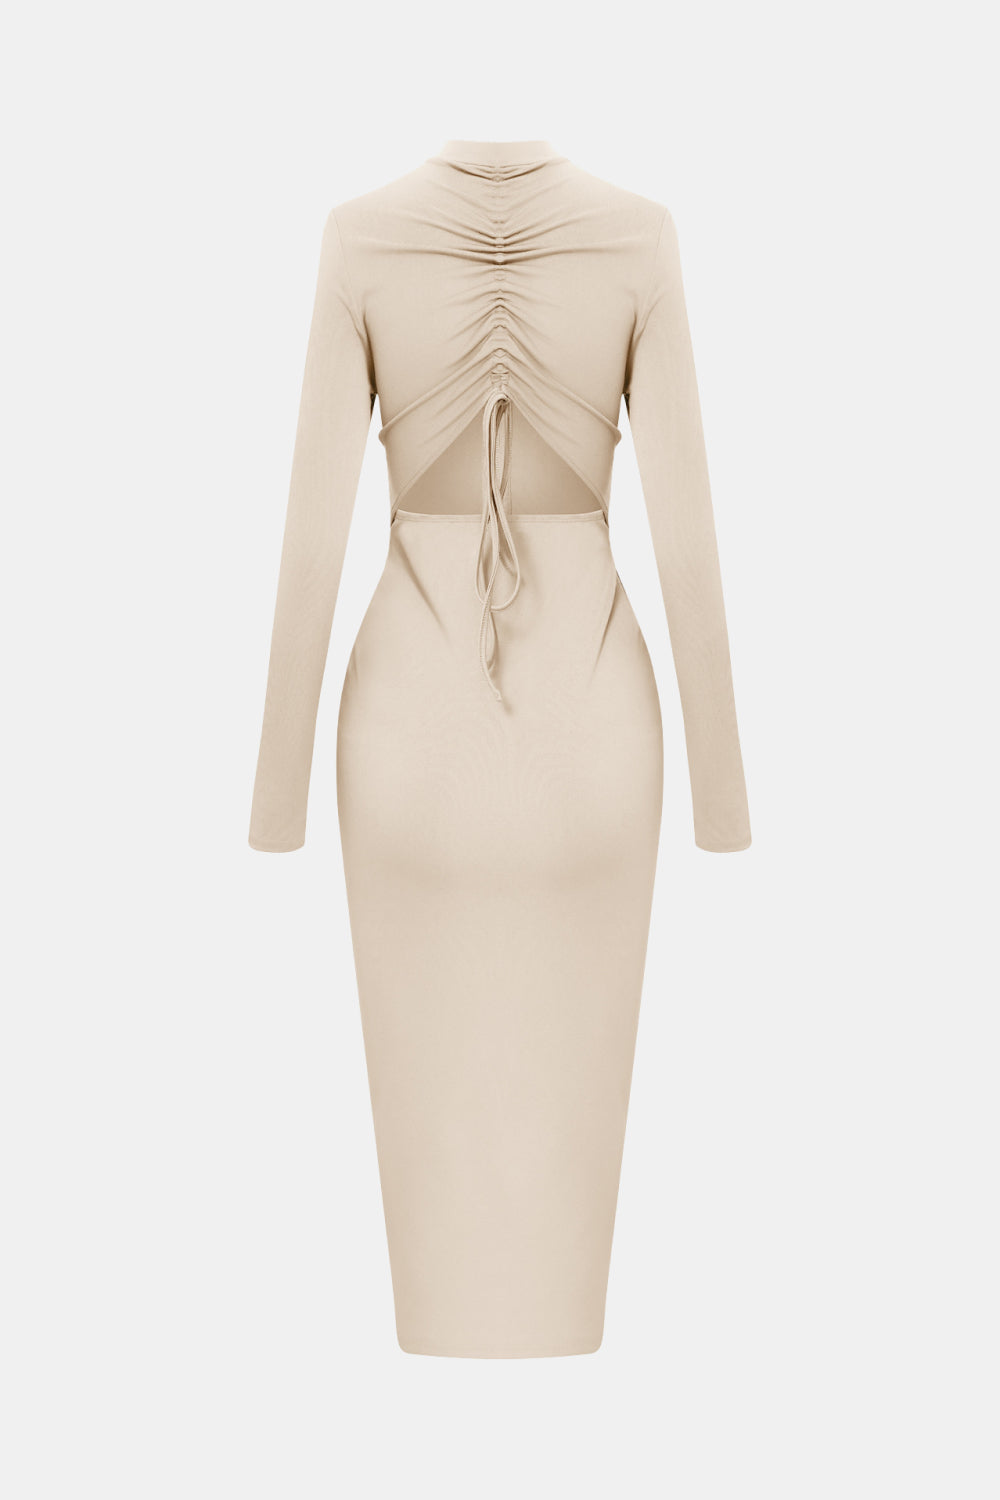 Dress: Zip Up Cutout Drawstring Detail Dress